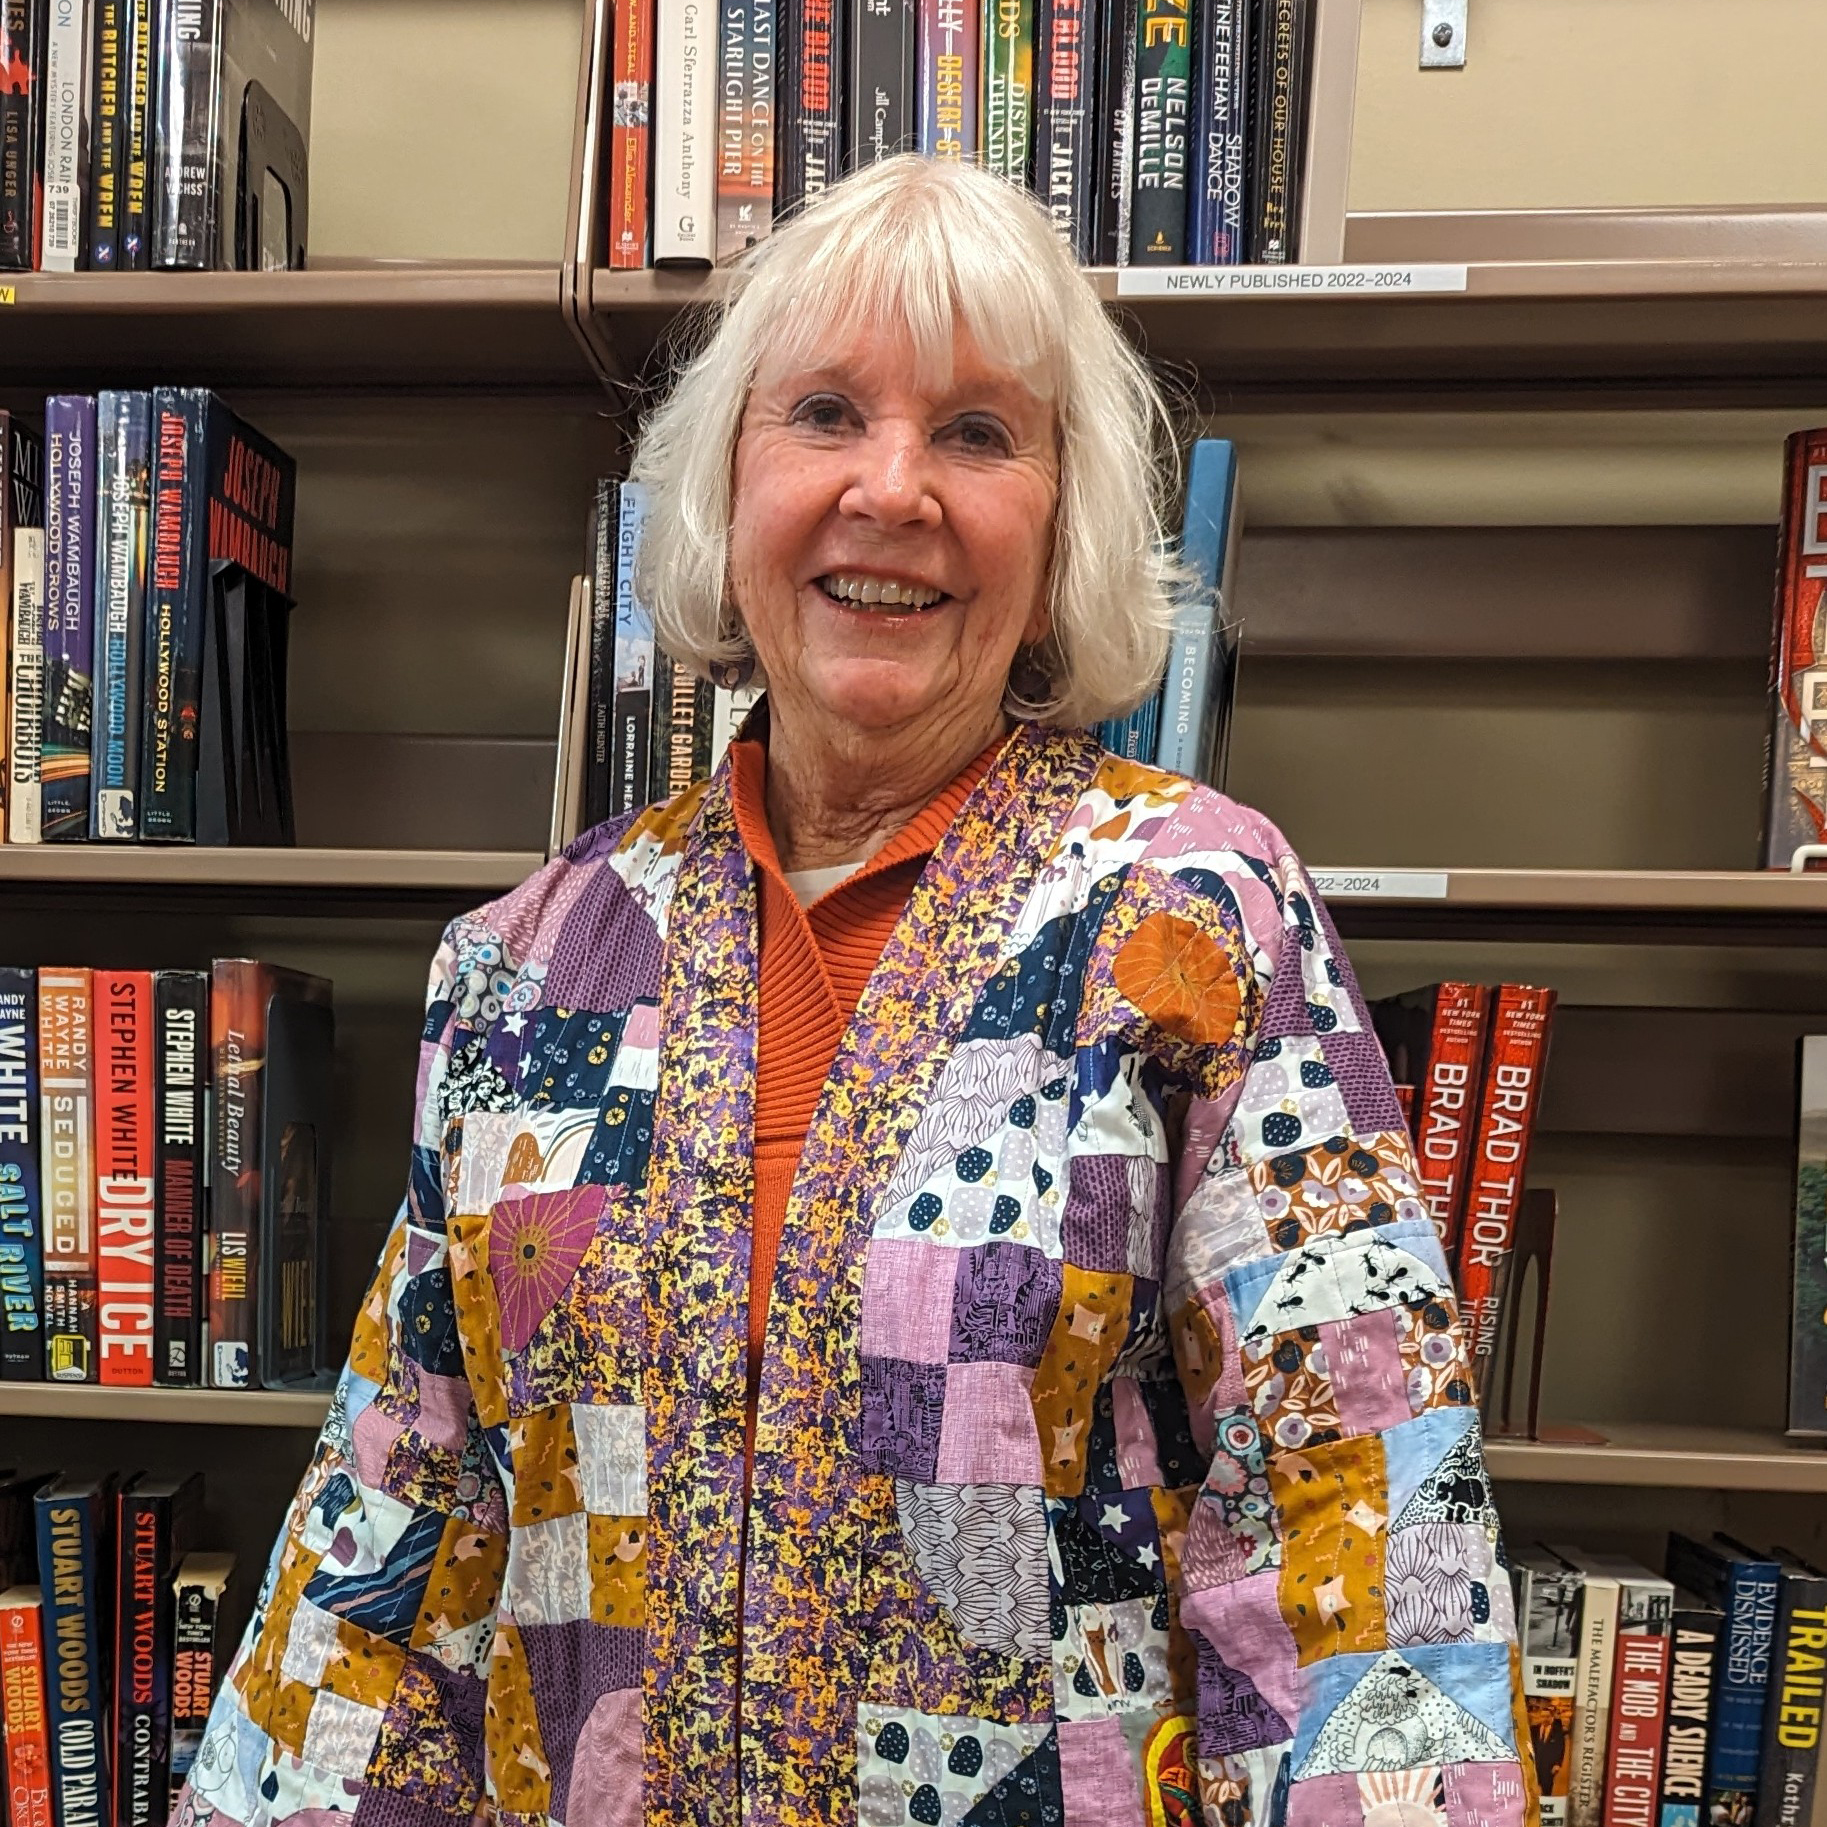 Linda Kuhlman in front of bookshelf